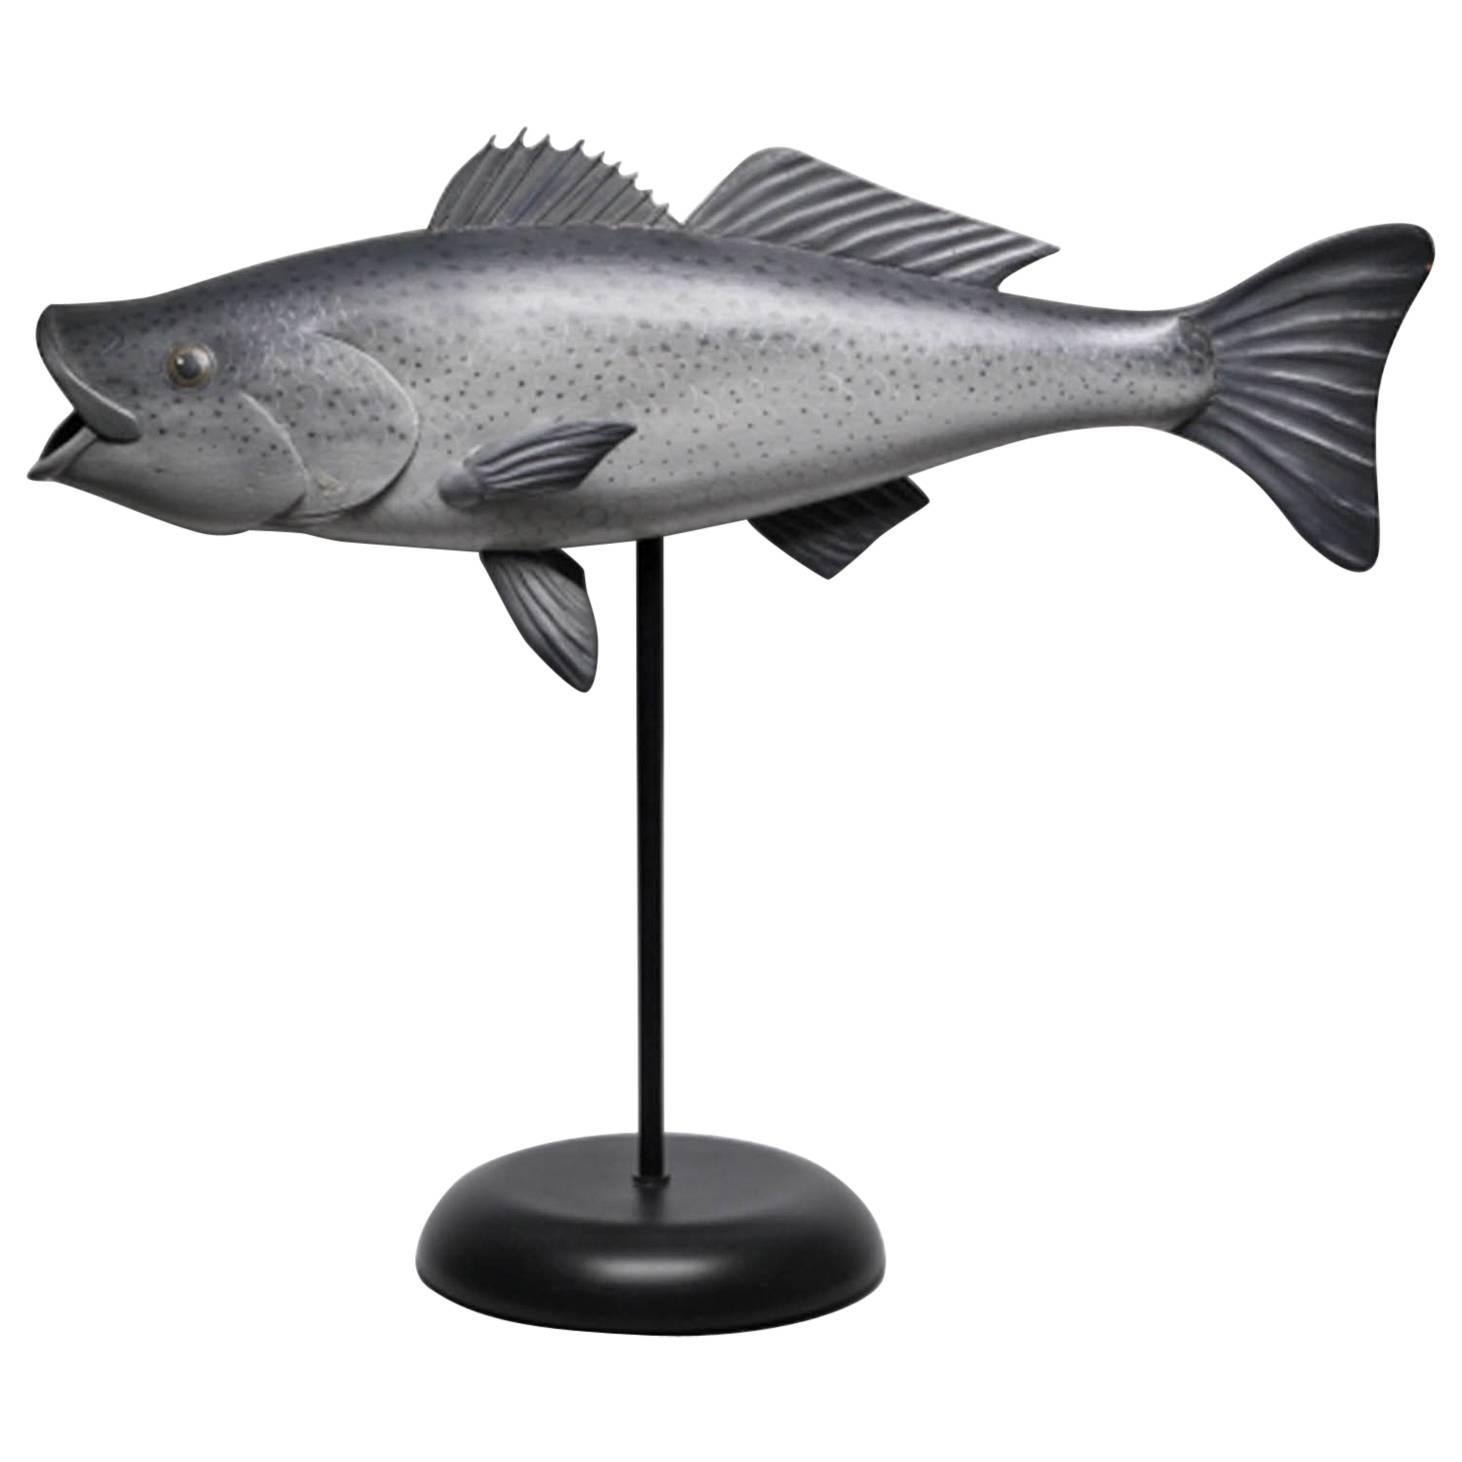 George Strunk Handmade Wooden Fish Sculpture